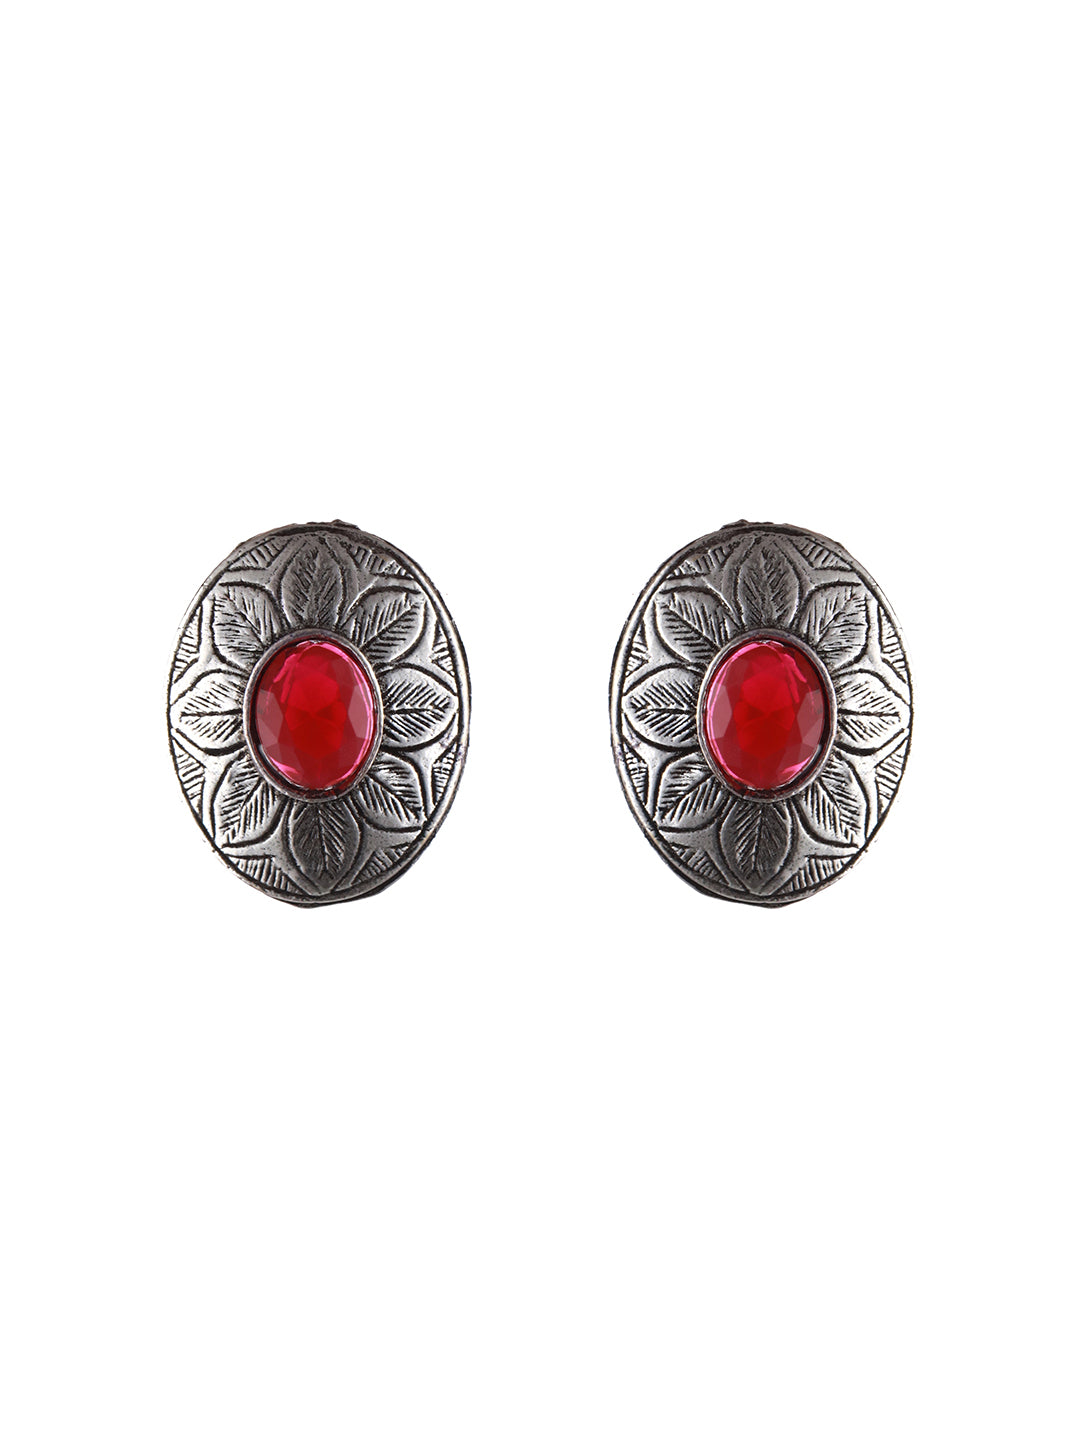 Oxidised Silver-Tone Red Stone Studded Jewellery Set - Jazzandsizzle